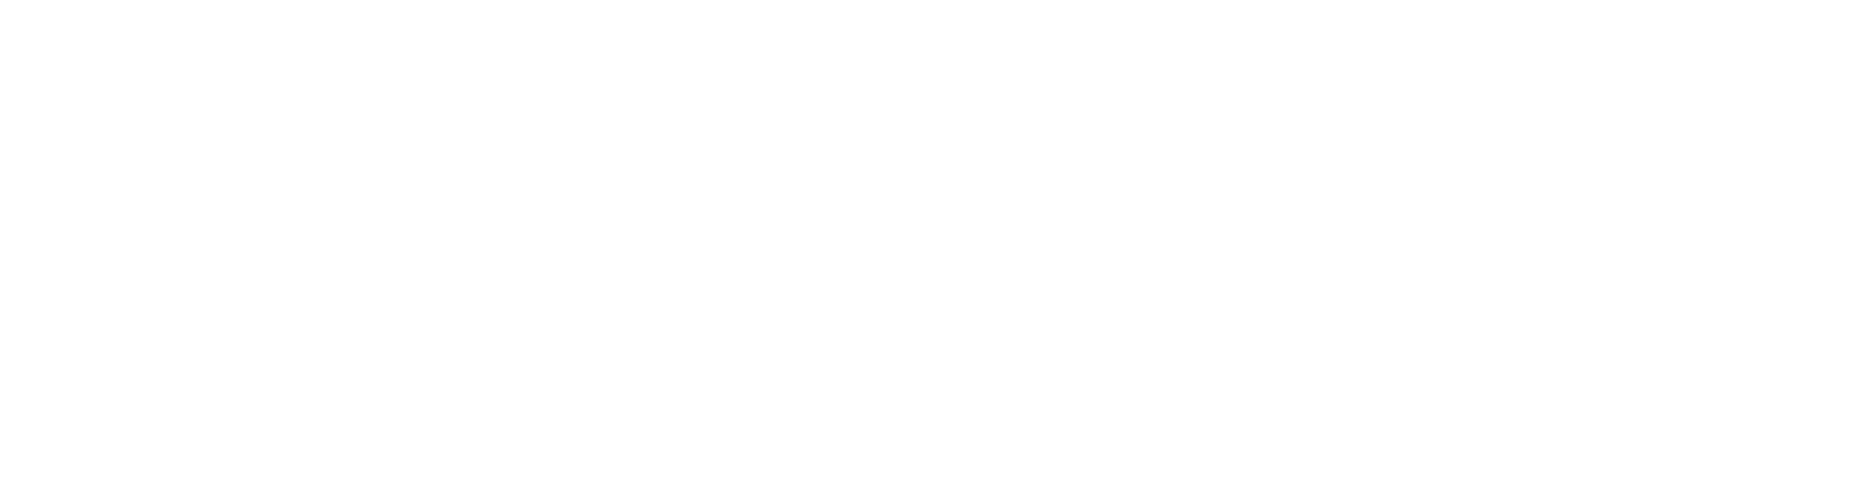 maxcarev2.png